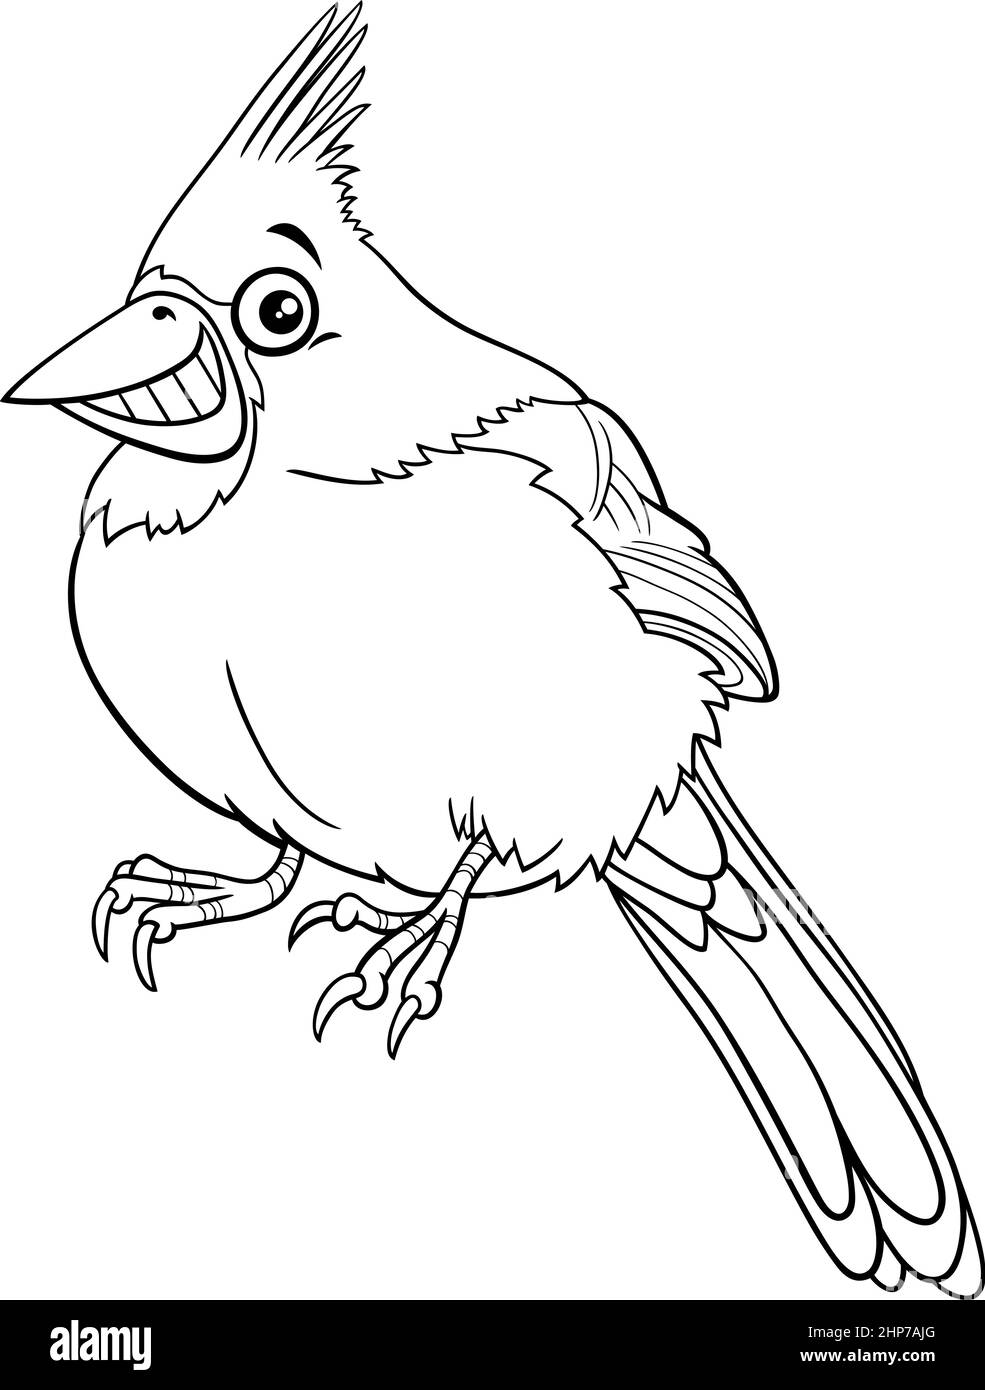 cartoon northern red cardinal bird character coloring book page Stock Vector